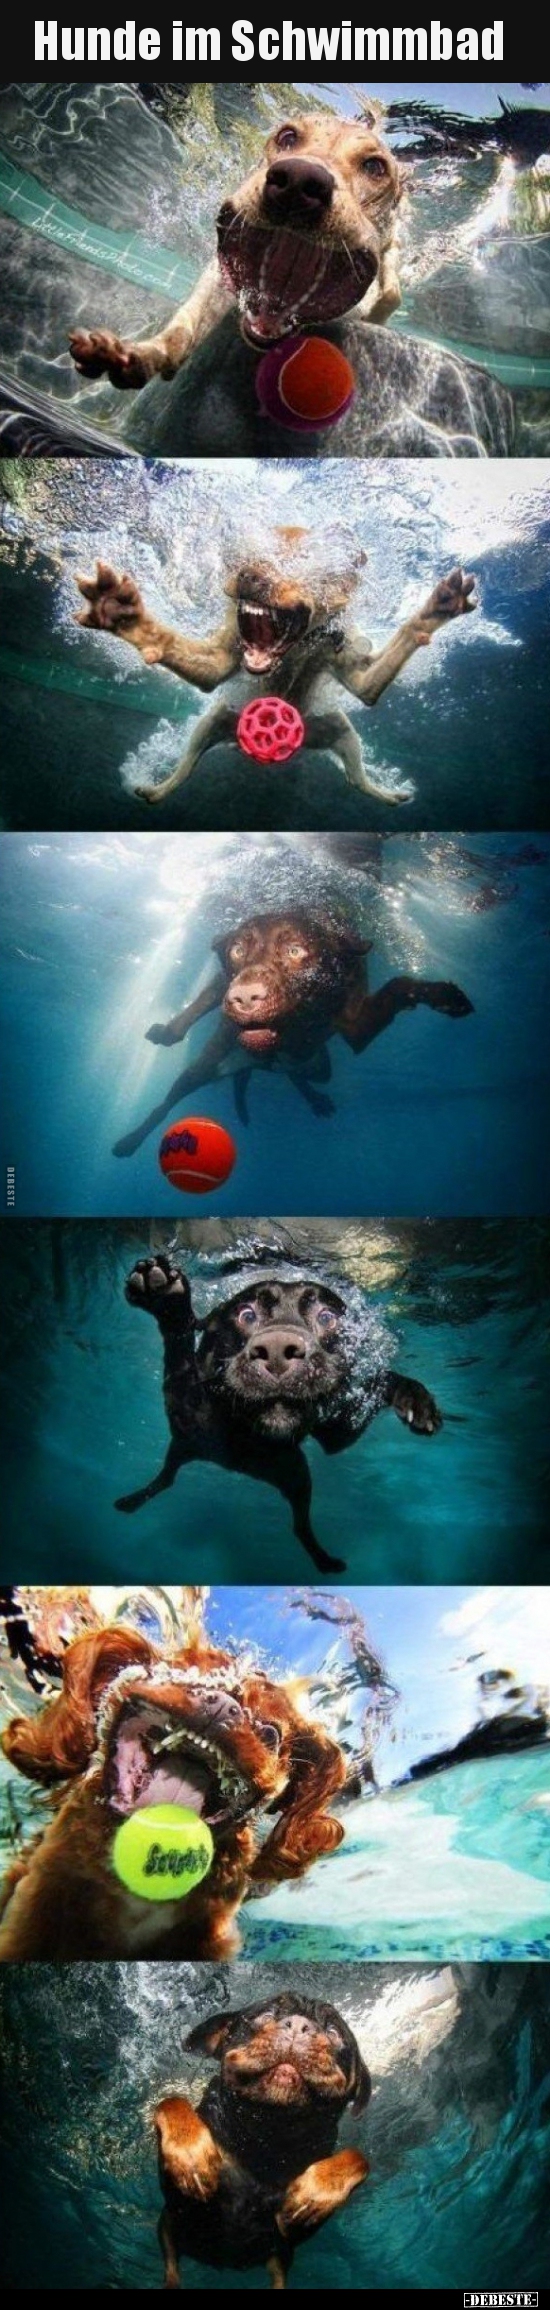 Hunde im Schwimmbad.. - Lustige Bilder | DEBESTE.de